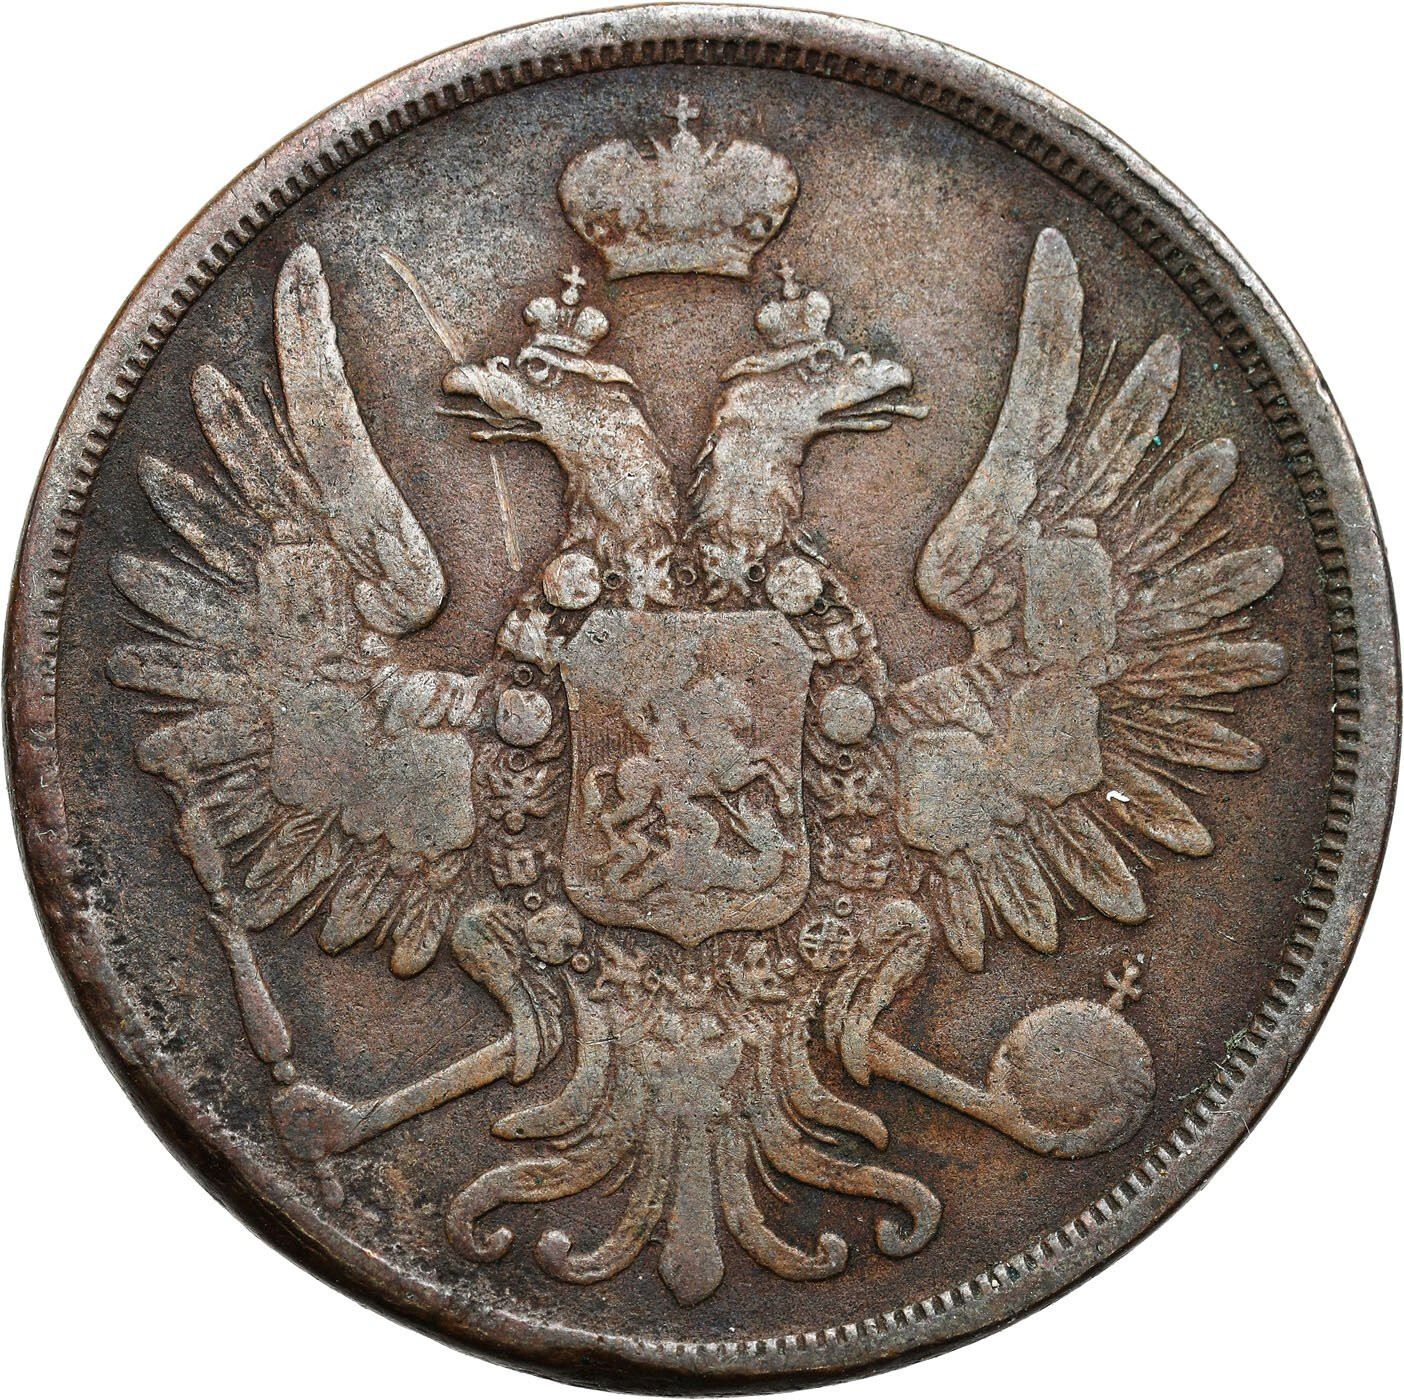 Polska XIX w./Rosja. Alexander II. 2 kopiejki 1858 BM, Warszawa